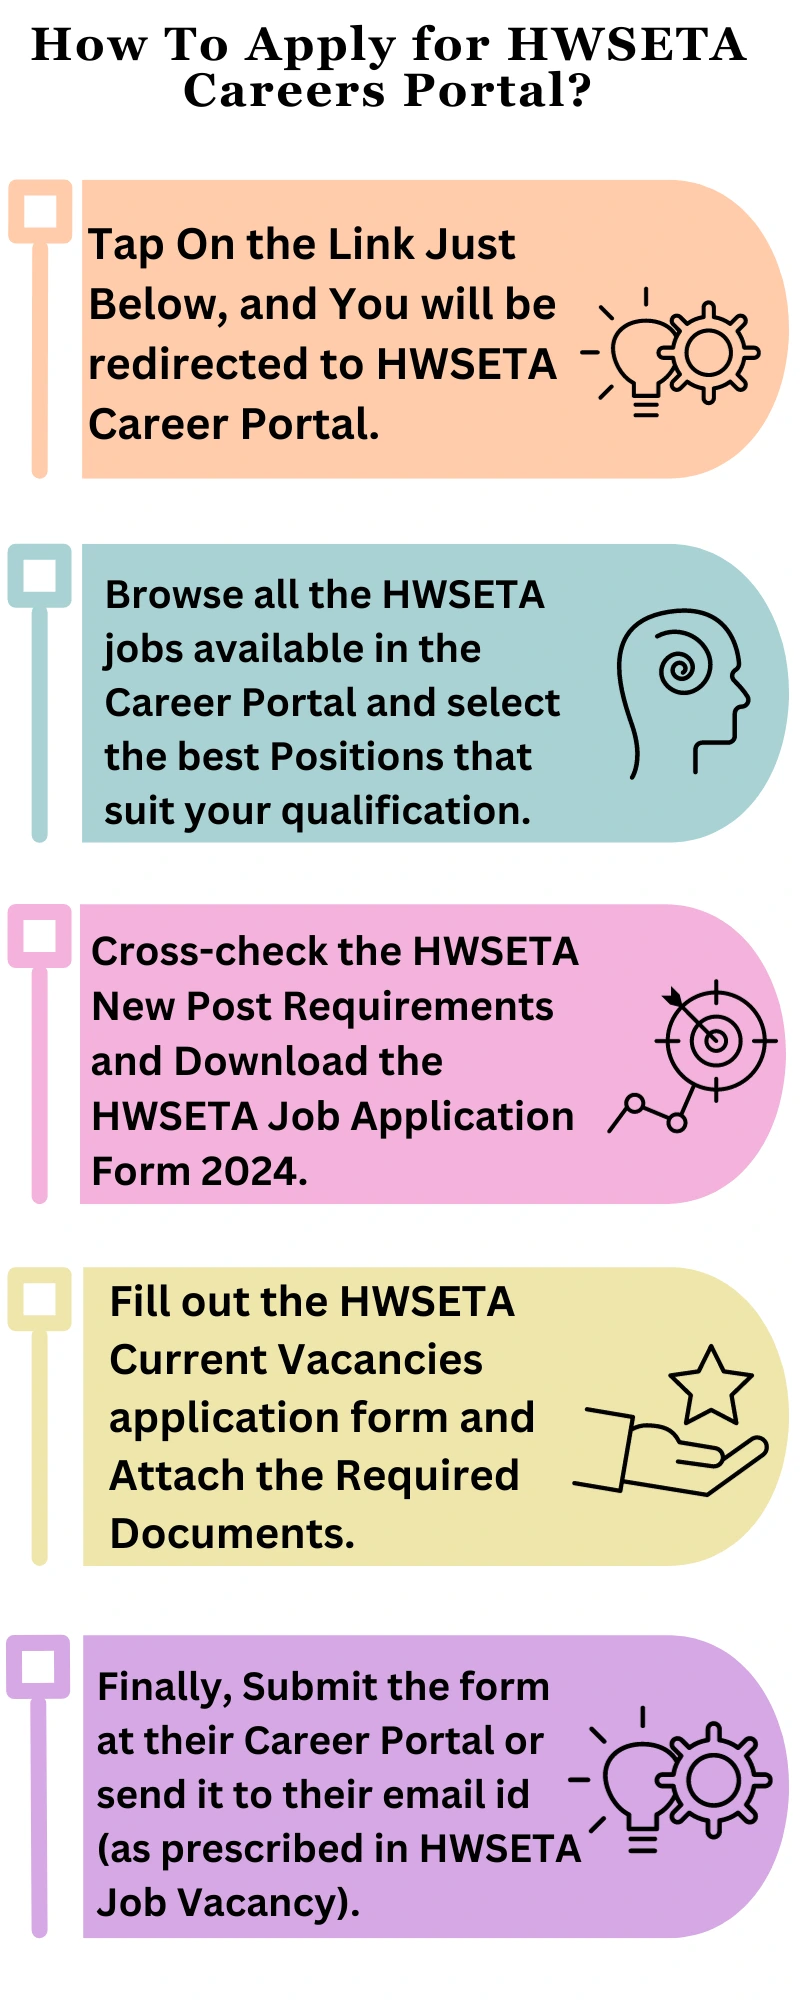 How To Apply for HWSETA Careers Portal?